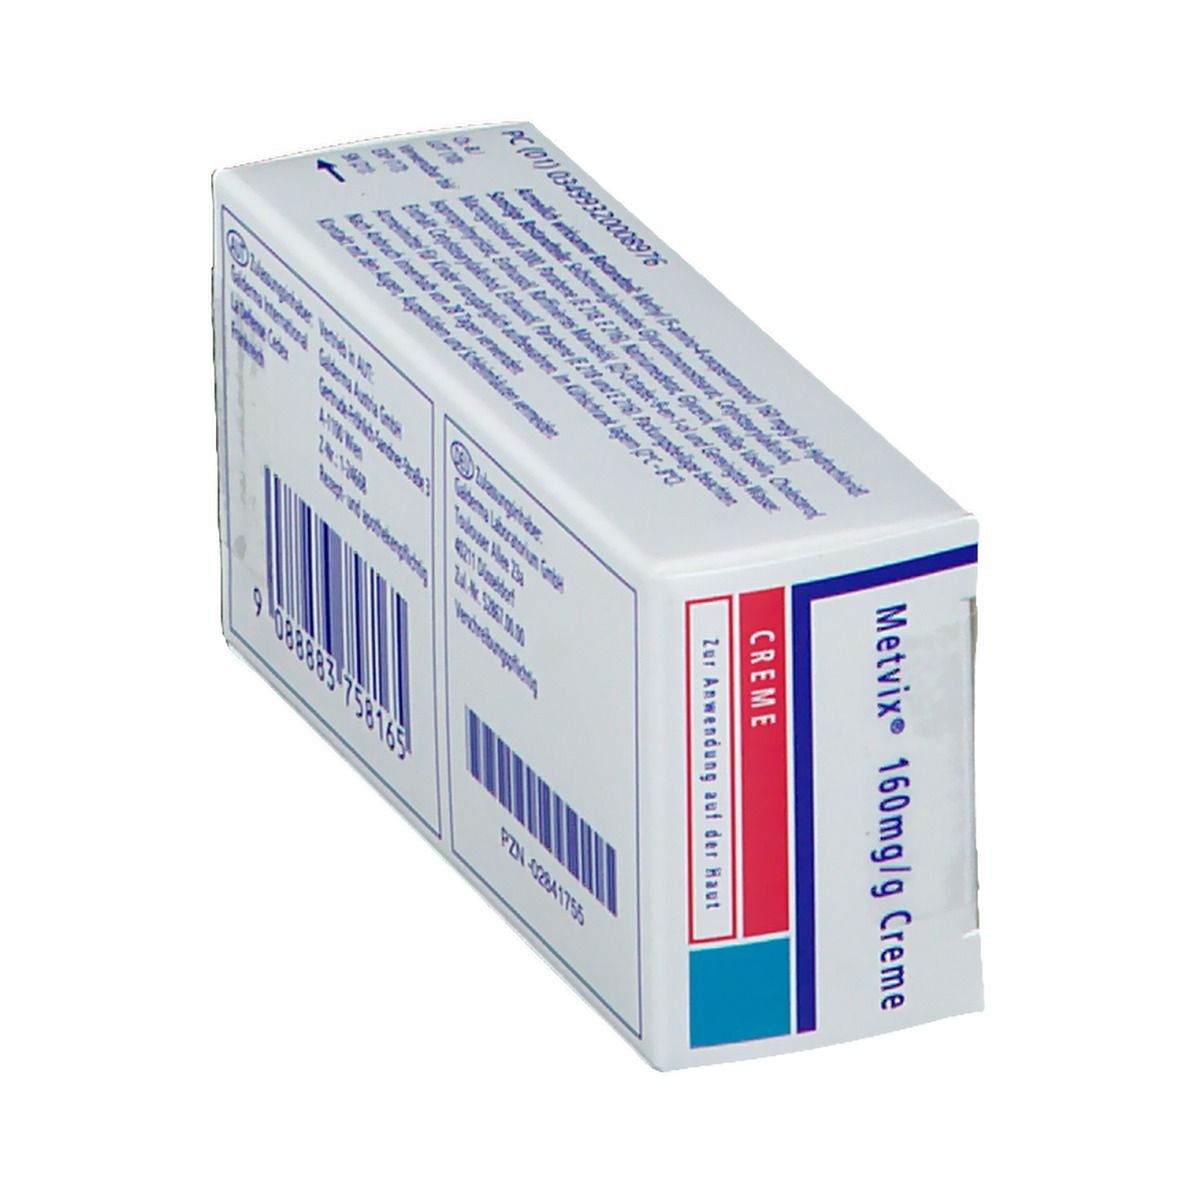 Metvix® 160 mg/g CREME